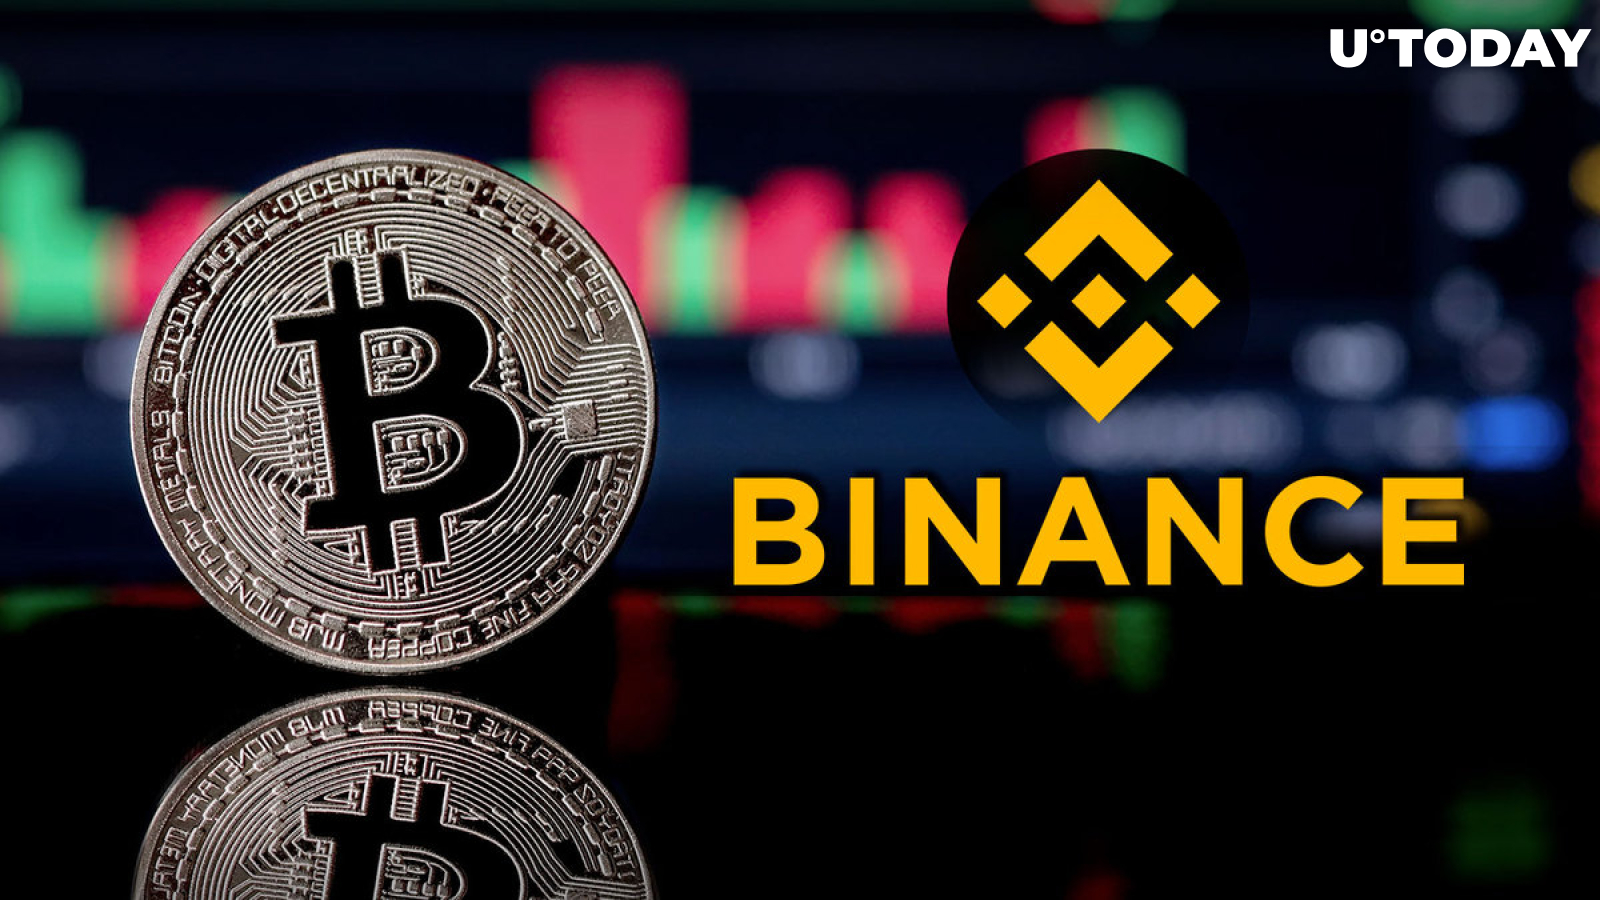 Binance Warns of Large Bitcoin Transfers Coming